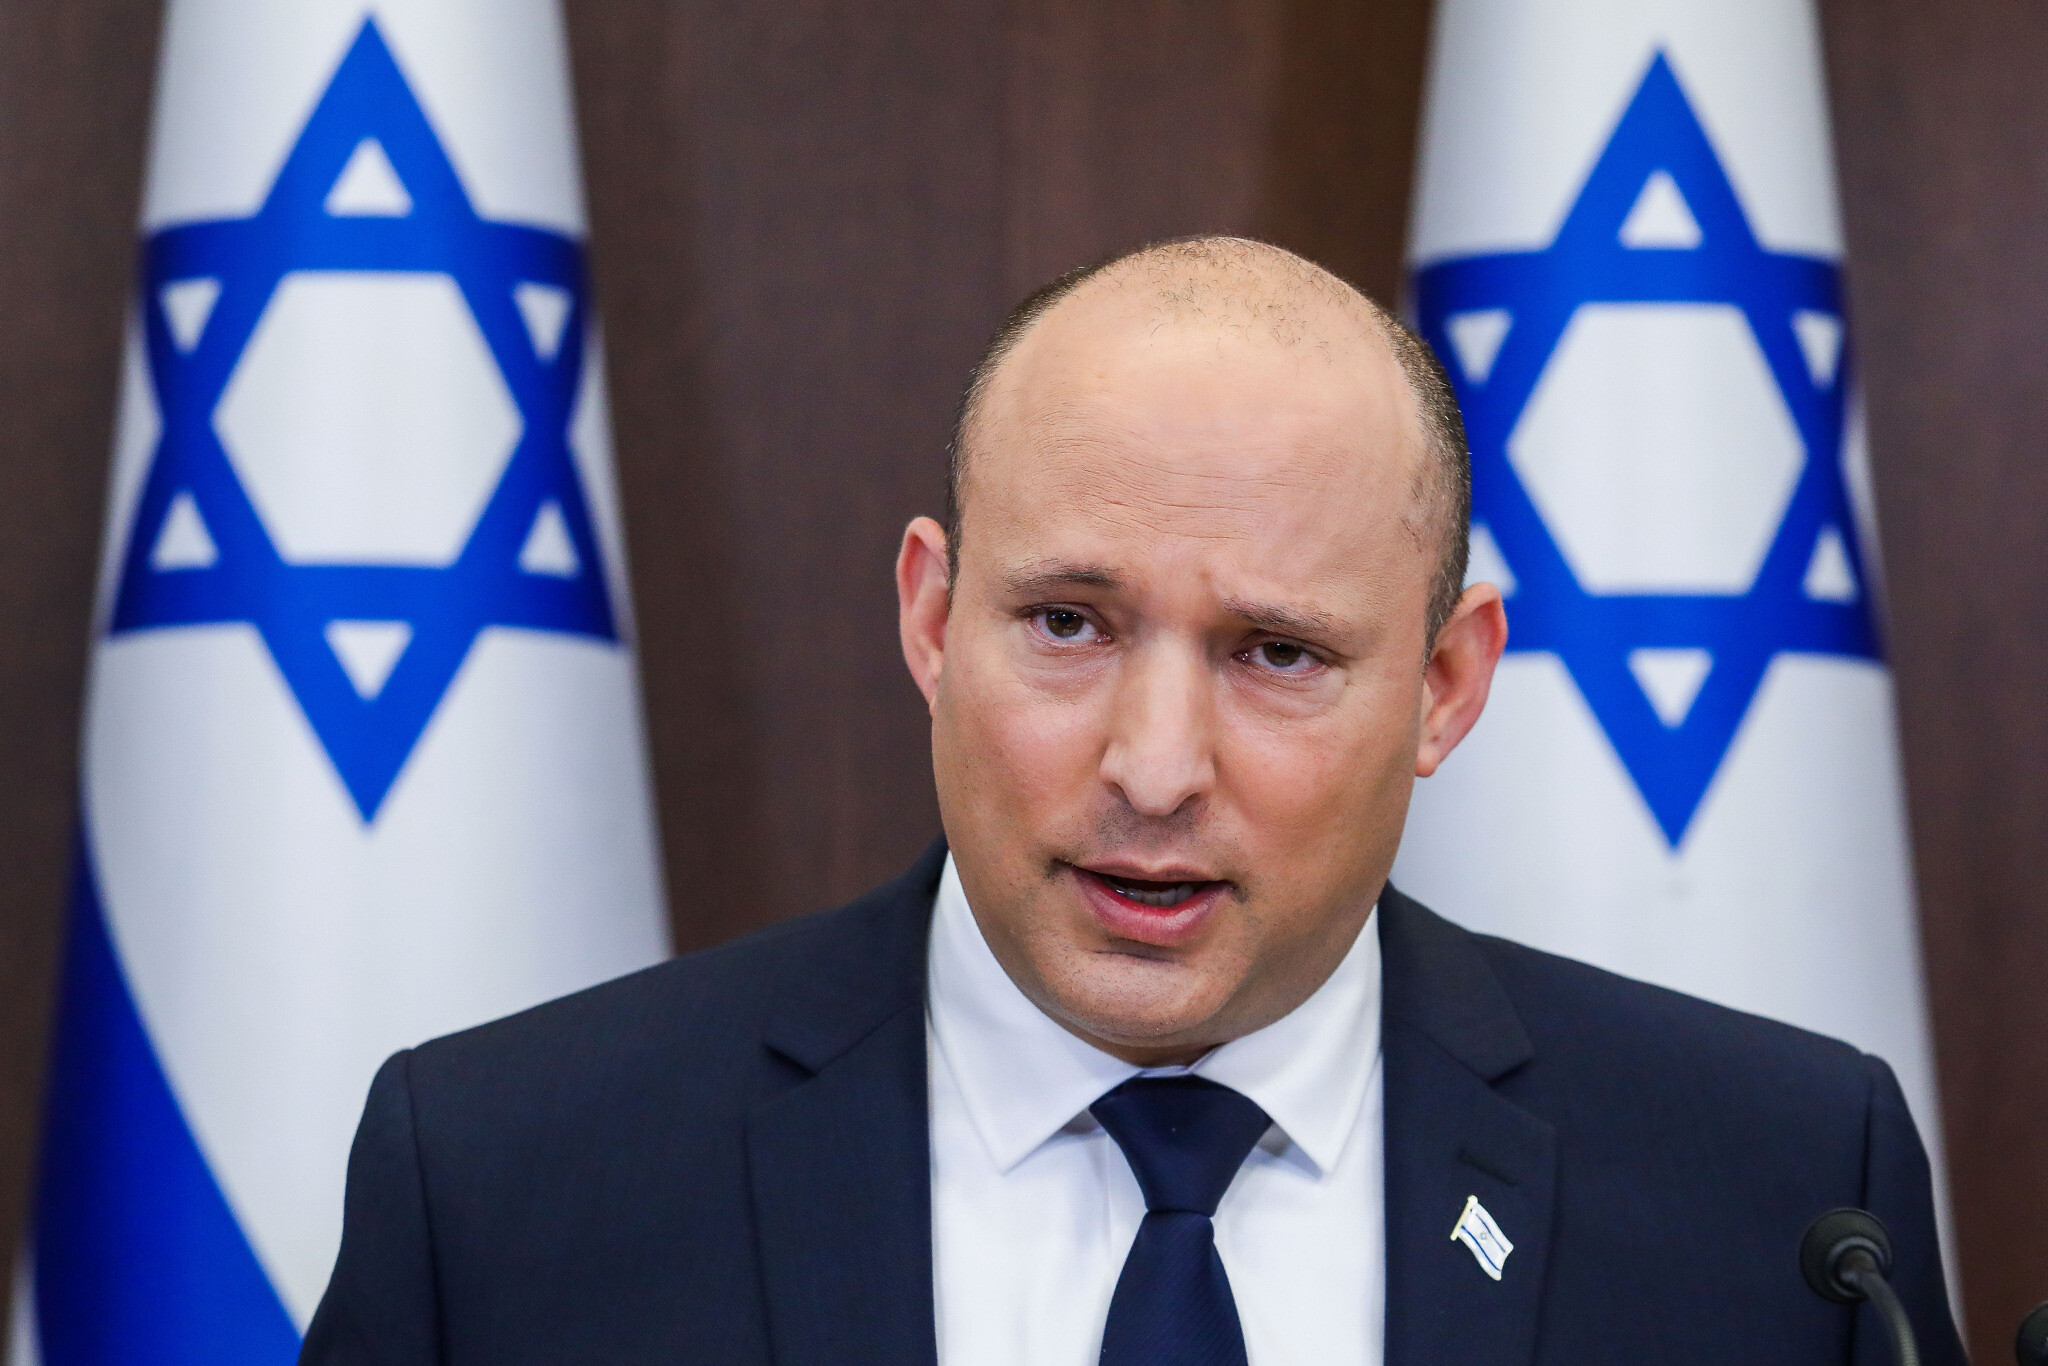 Prime Minister Naftali Bennett leads a cabinet meeting at the Prime Minister’s Office in Jerusalem on November 21, 2021. (Marc Israel Sellem/pool/Flash90)